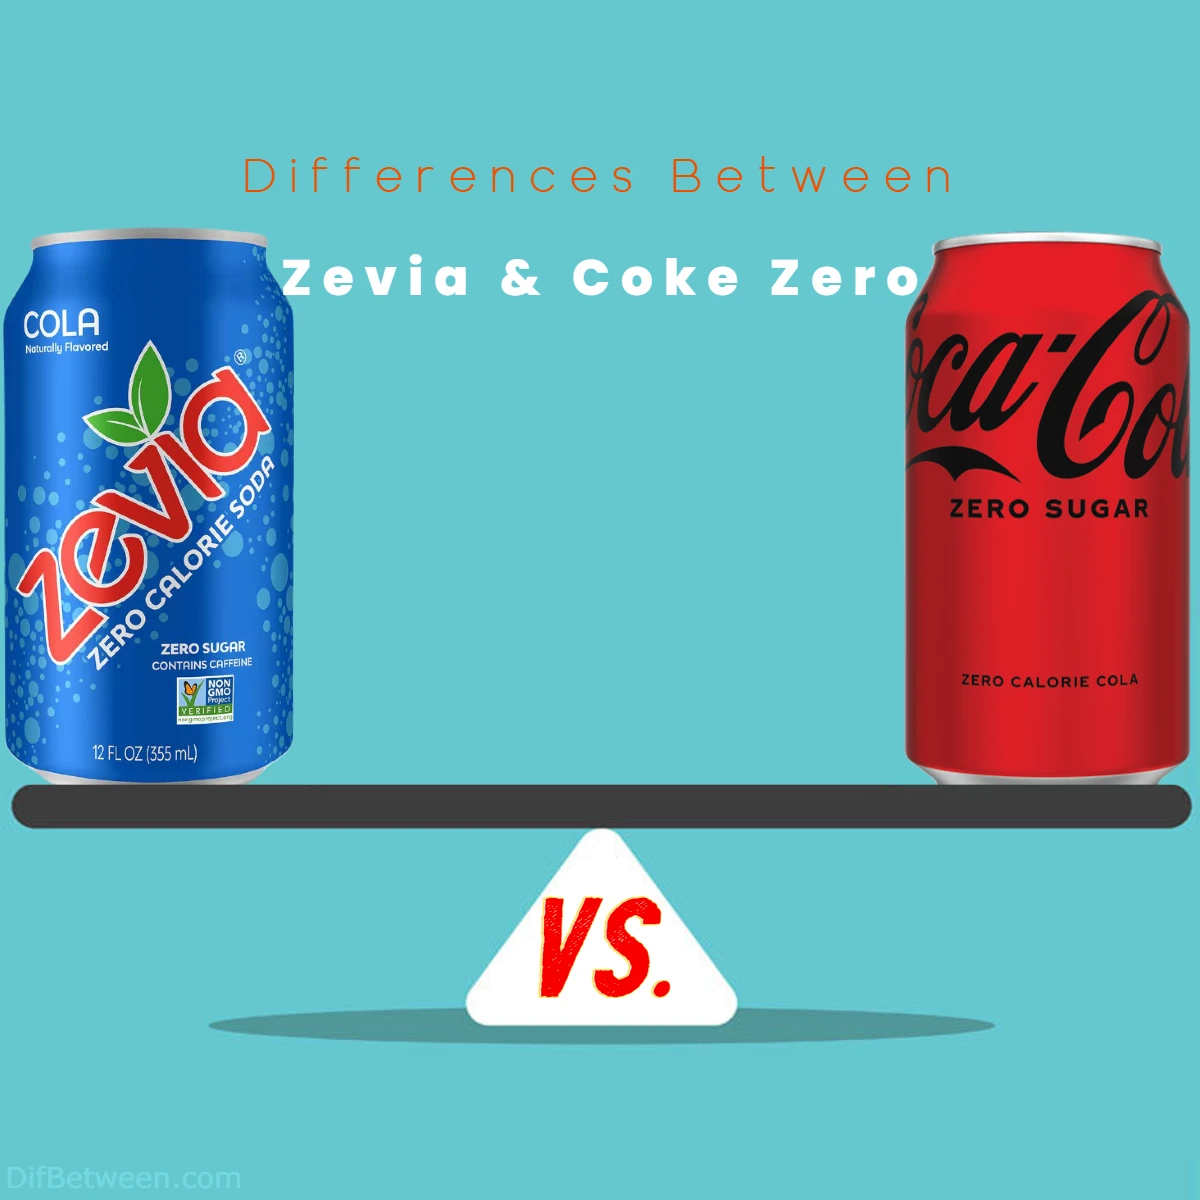 Differences Between Coke Zero and Zevia Cola